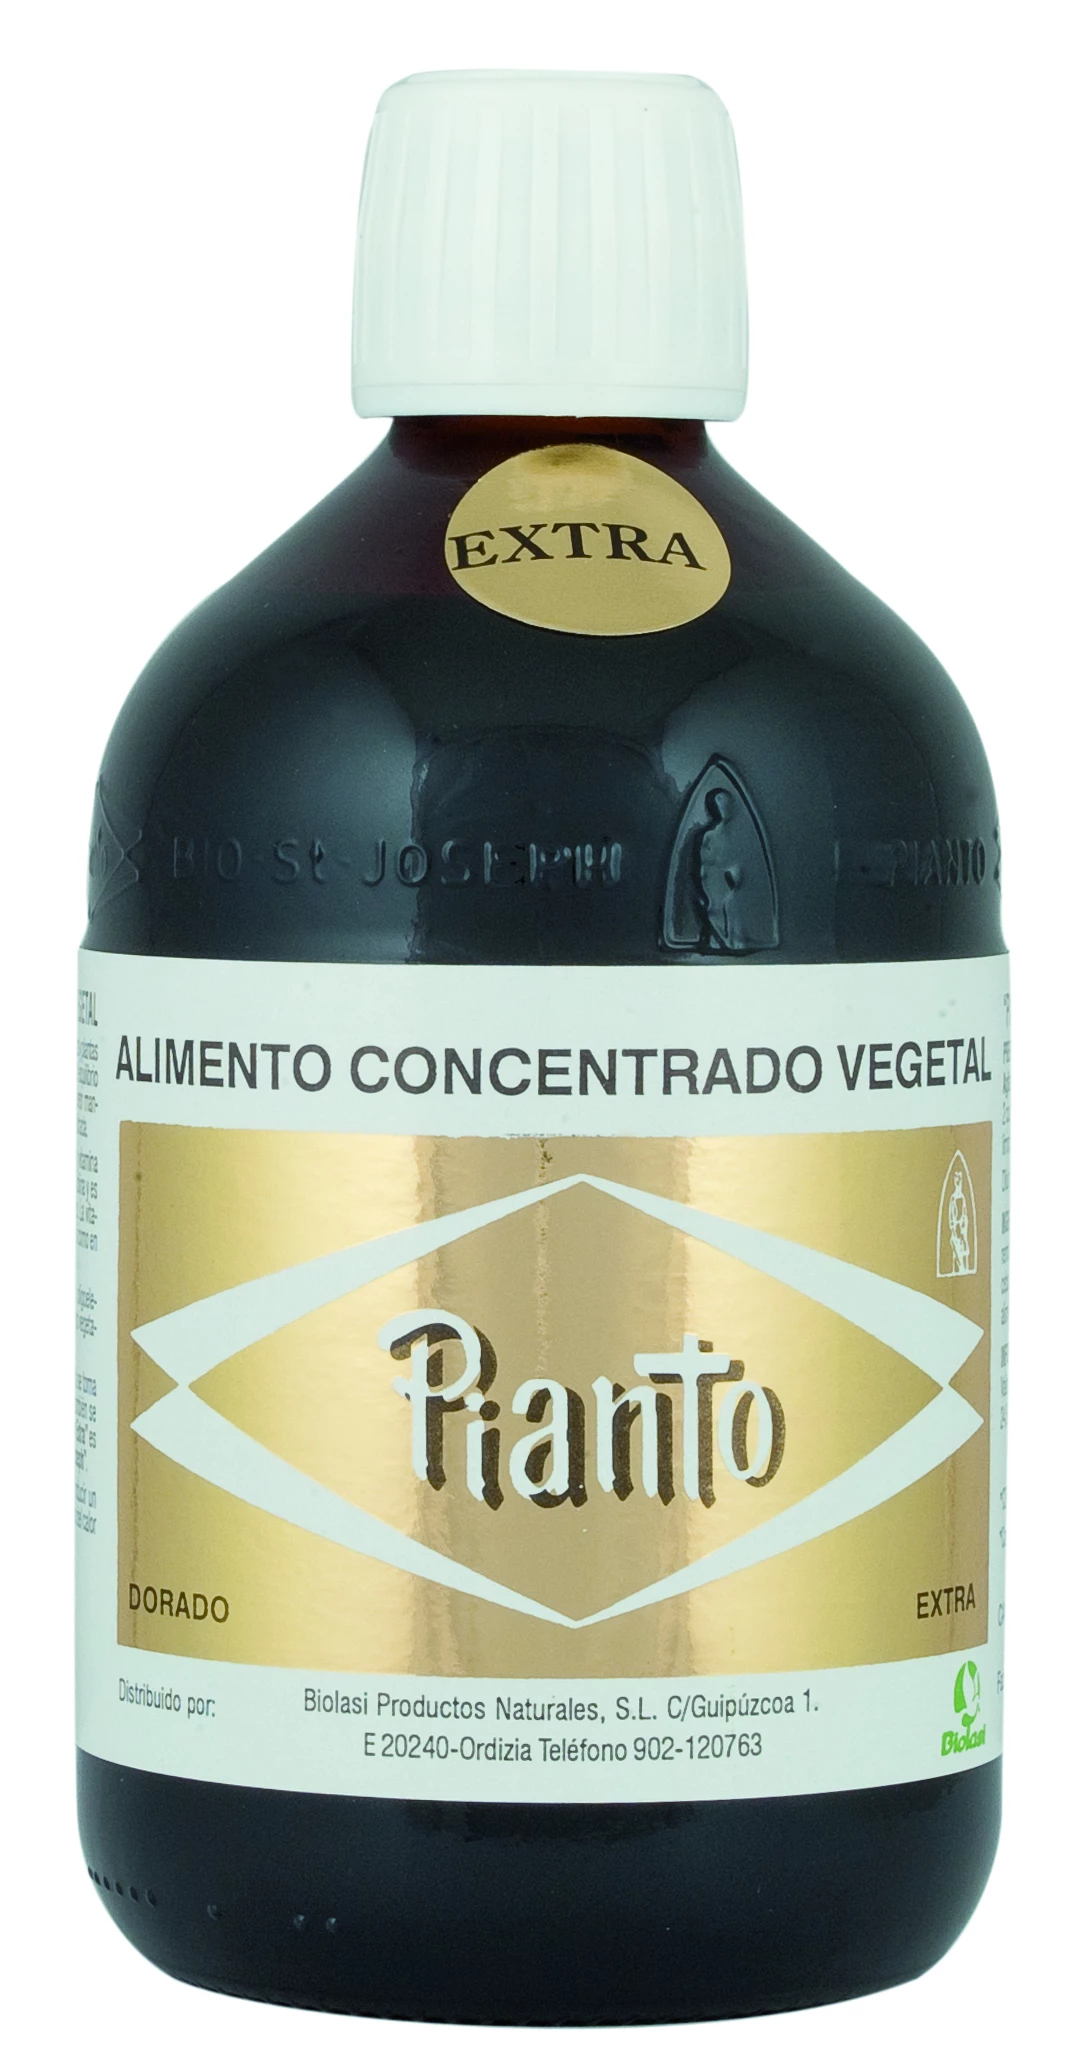 Biolasi Pianto Extra, 390 ml. Salud celular. 